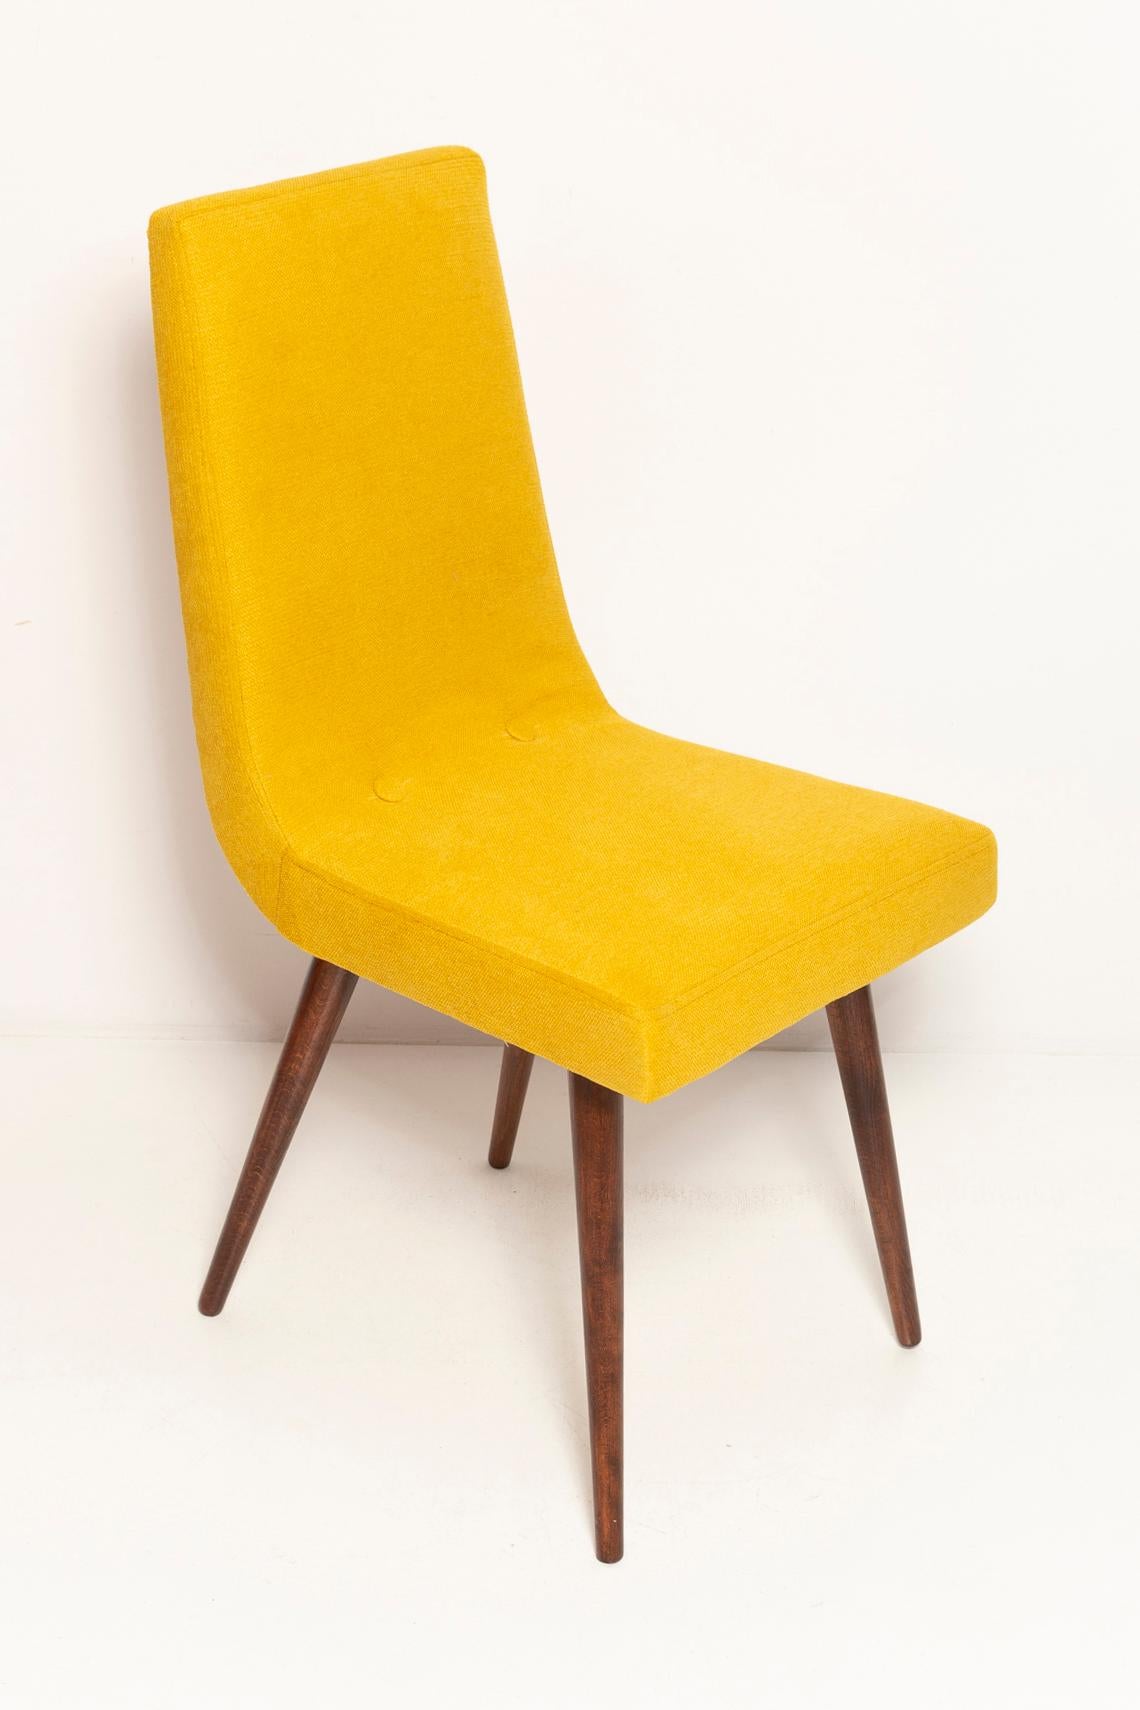 Midcentury Mustard Yellow Wool Chair, Rajmund Halas, Europe, 1960s For Sale 2